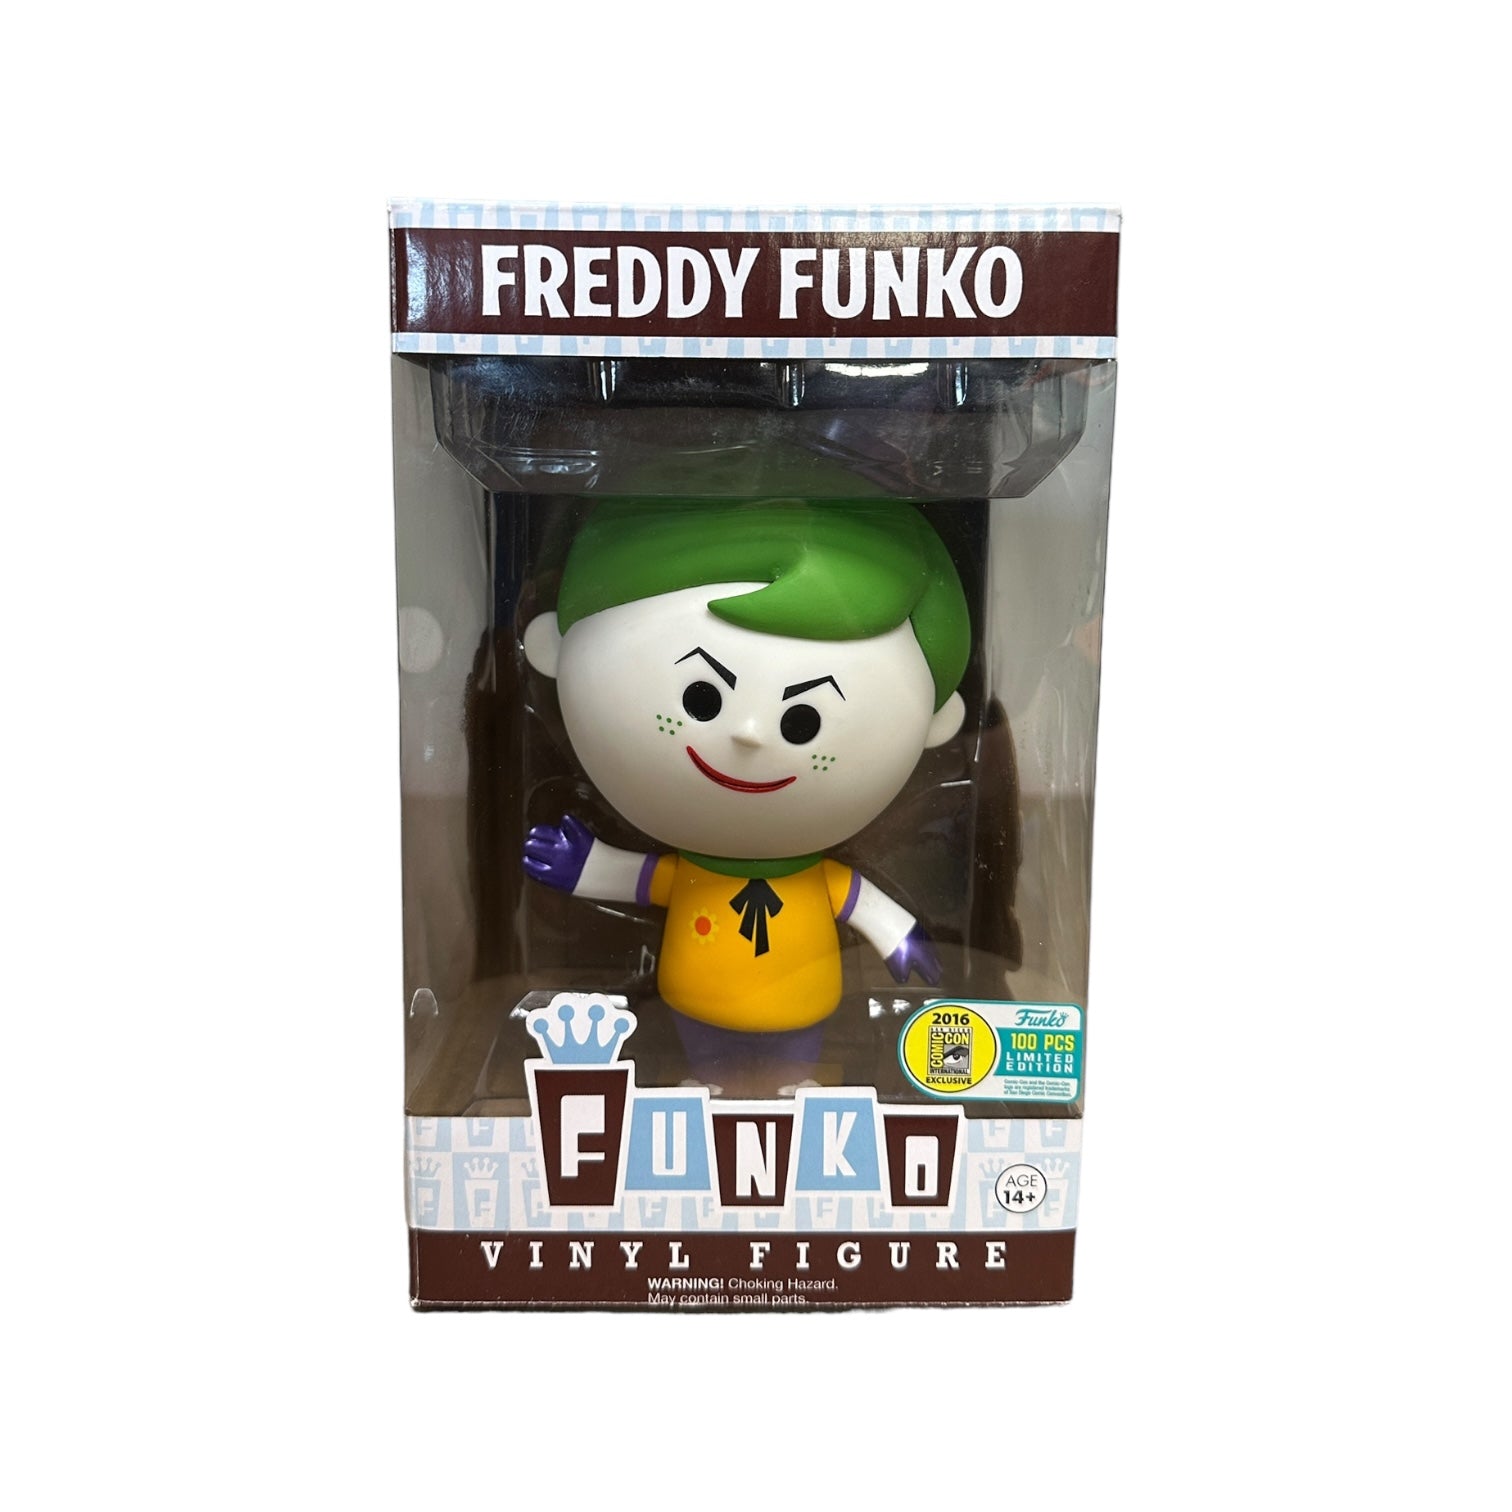 Freddy Funko as The Joker Retro Vinyl Figure! - DC - SDCC 2016 Exclusive LE100 Pcs - Condition 7.5/10